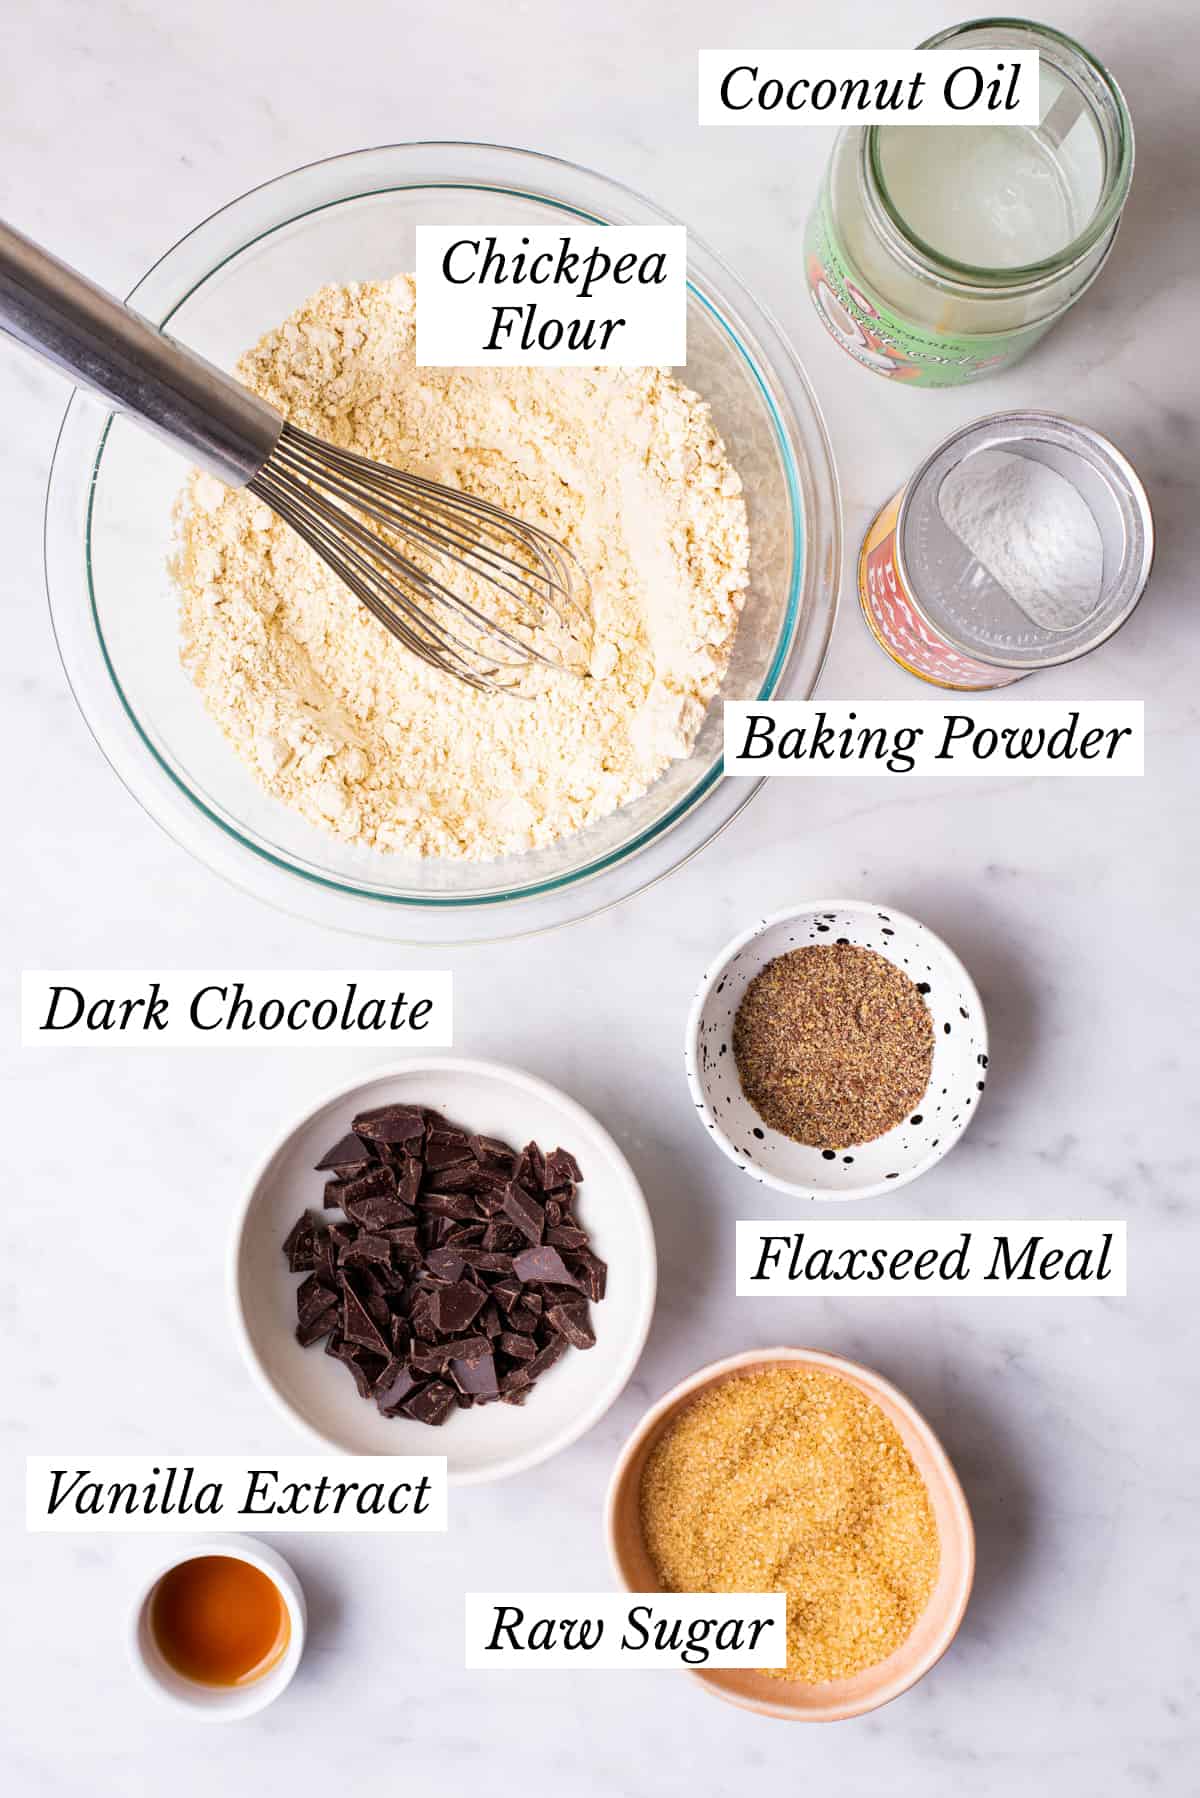 Ingredients gathered to make vegan chickpea chocolate chip cookies.